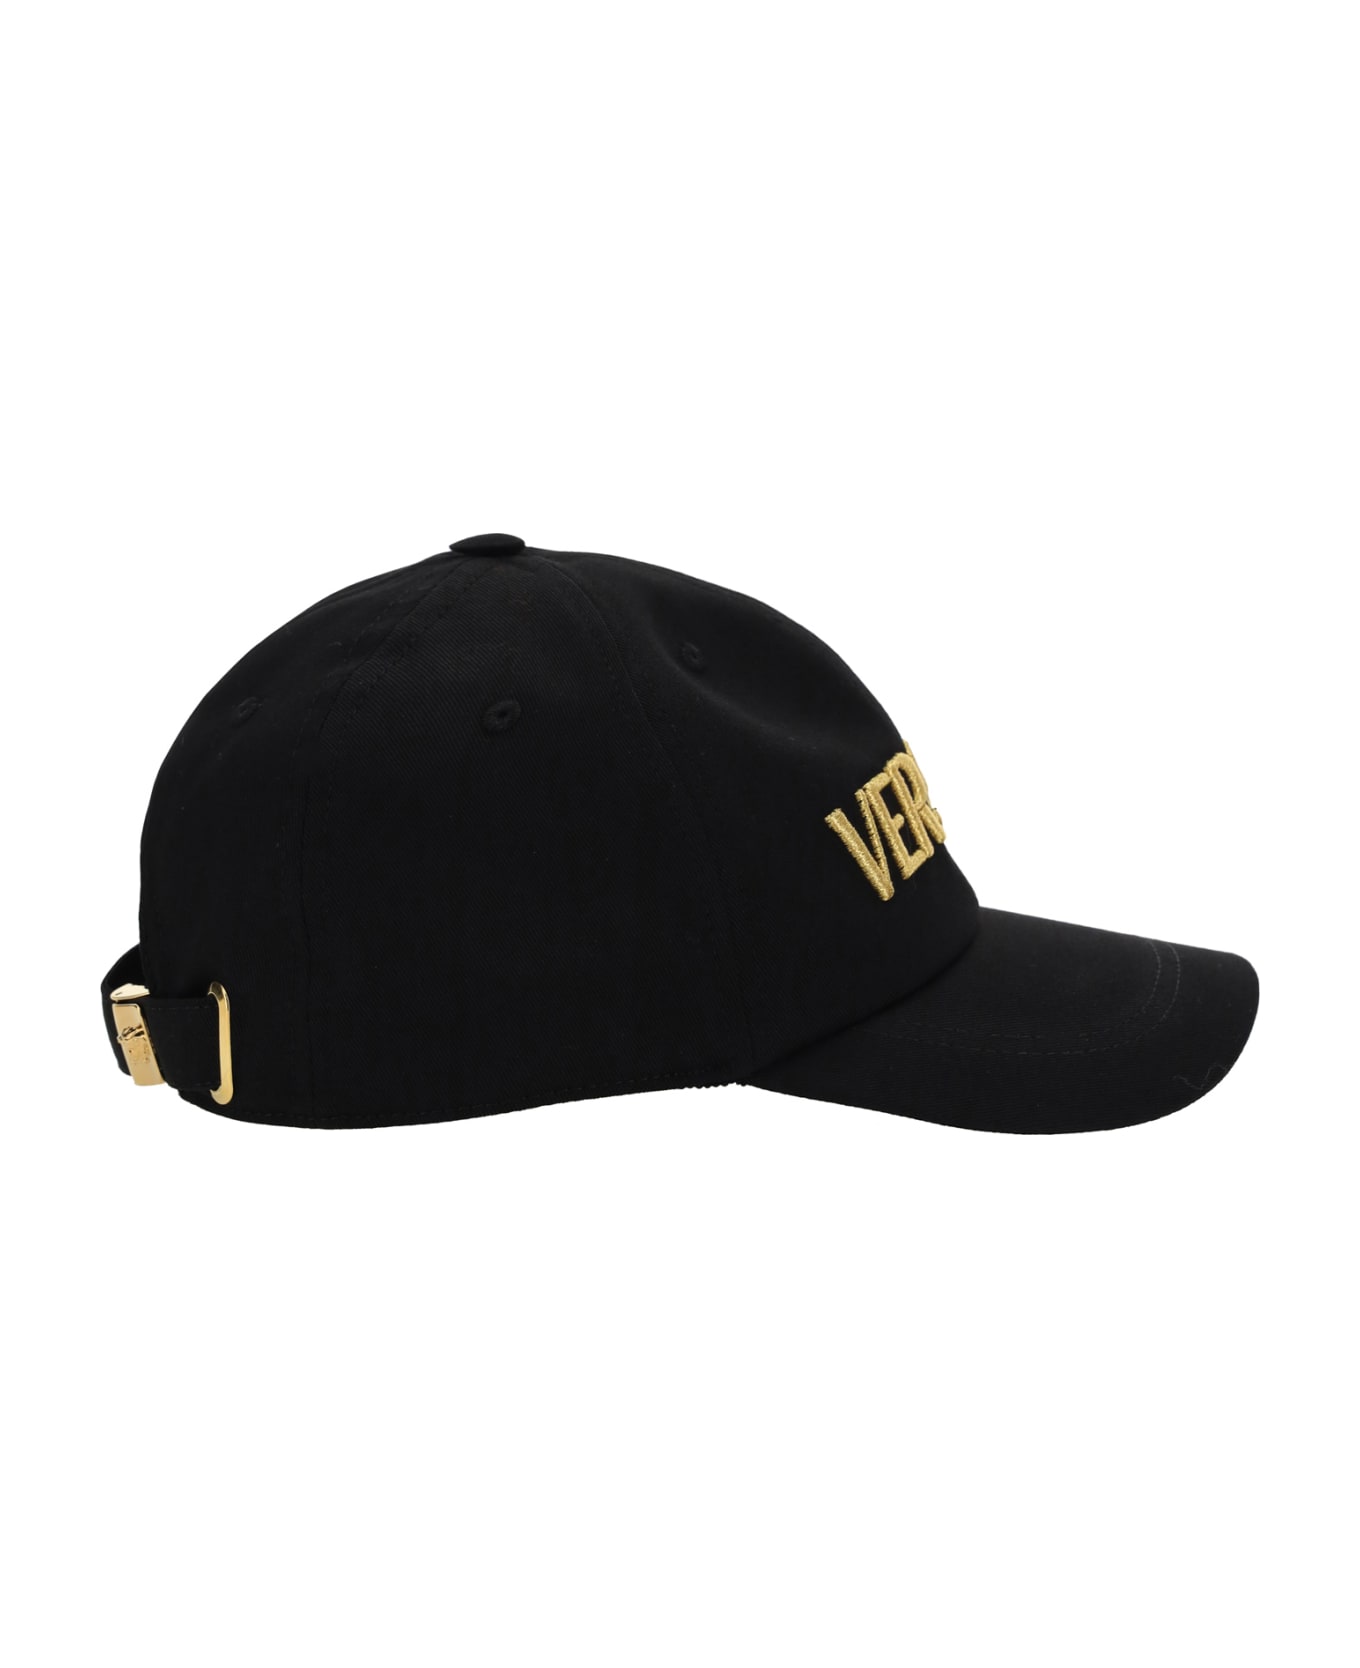 Versace Logo Baseball Cap - black 帽子